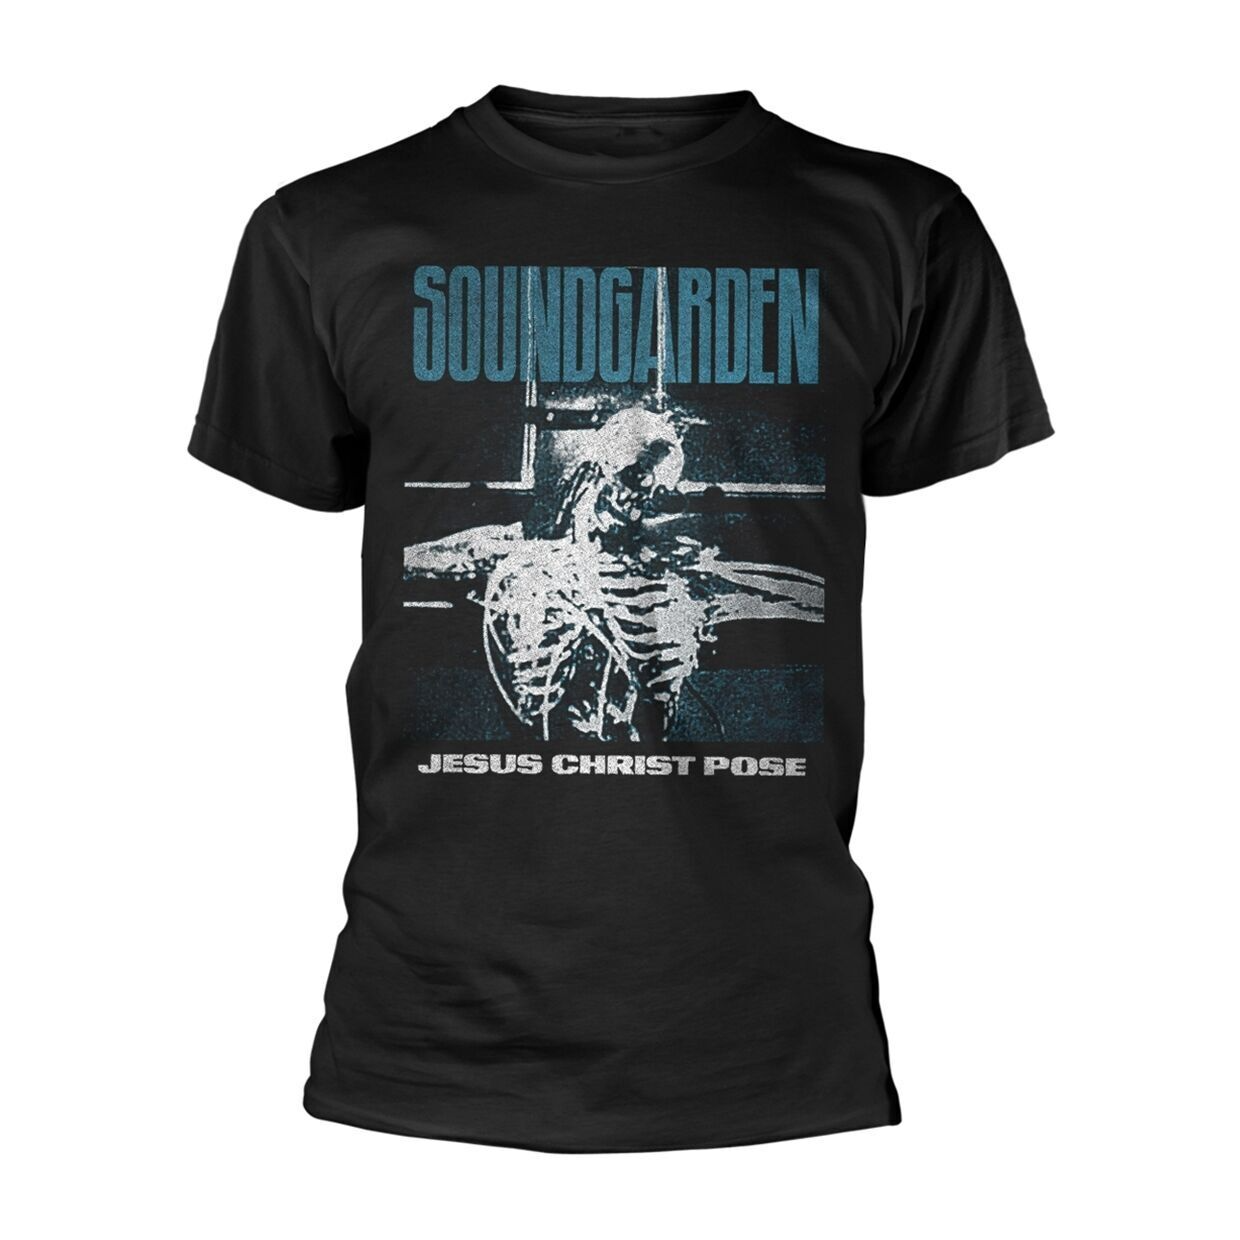 Soundgarden 'Jesus Christ Pose' T shirt - NEW audioslave chris cornell